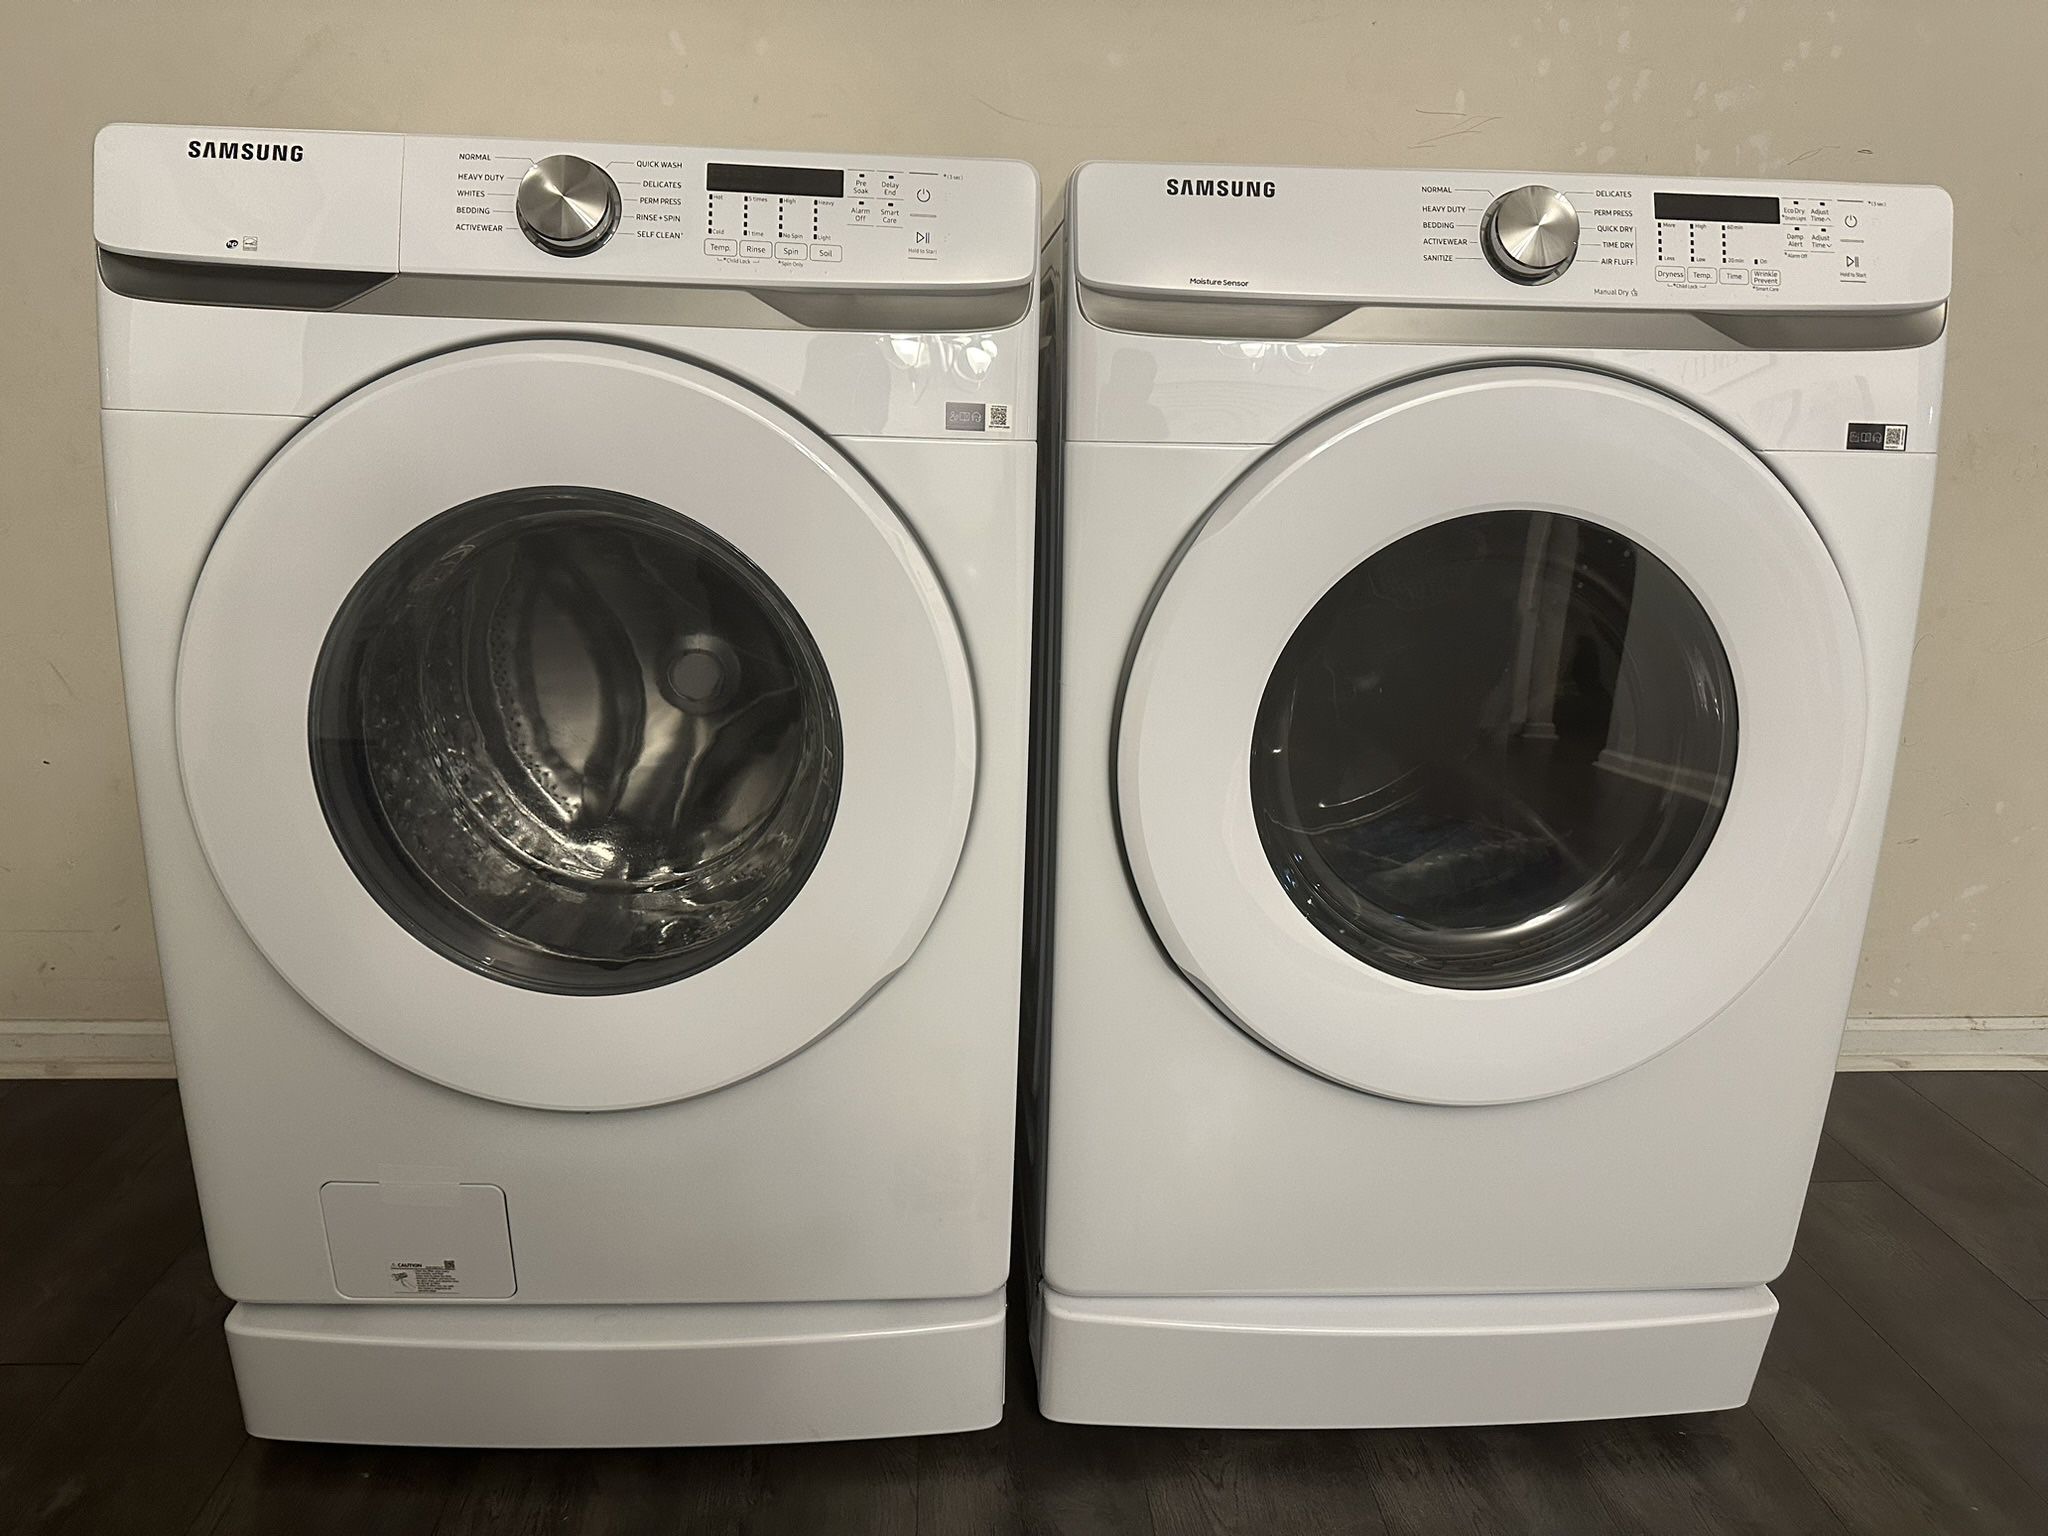 Samsung Washer And Dryer Set With Pedestals